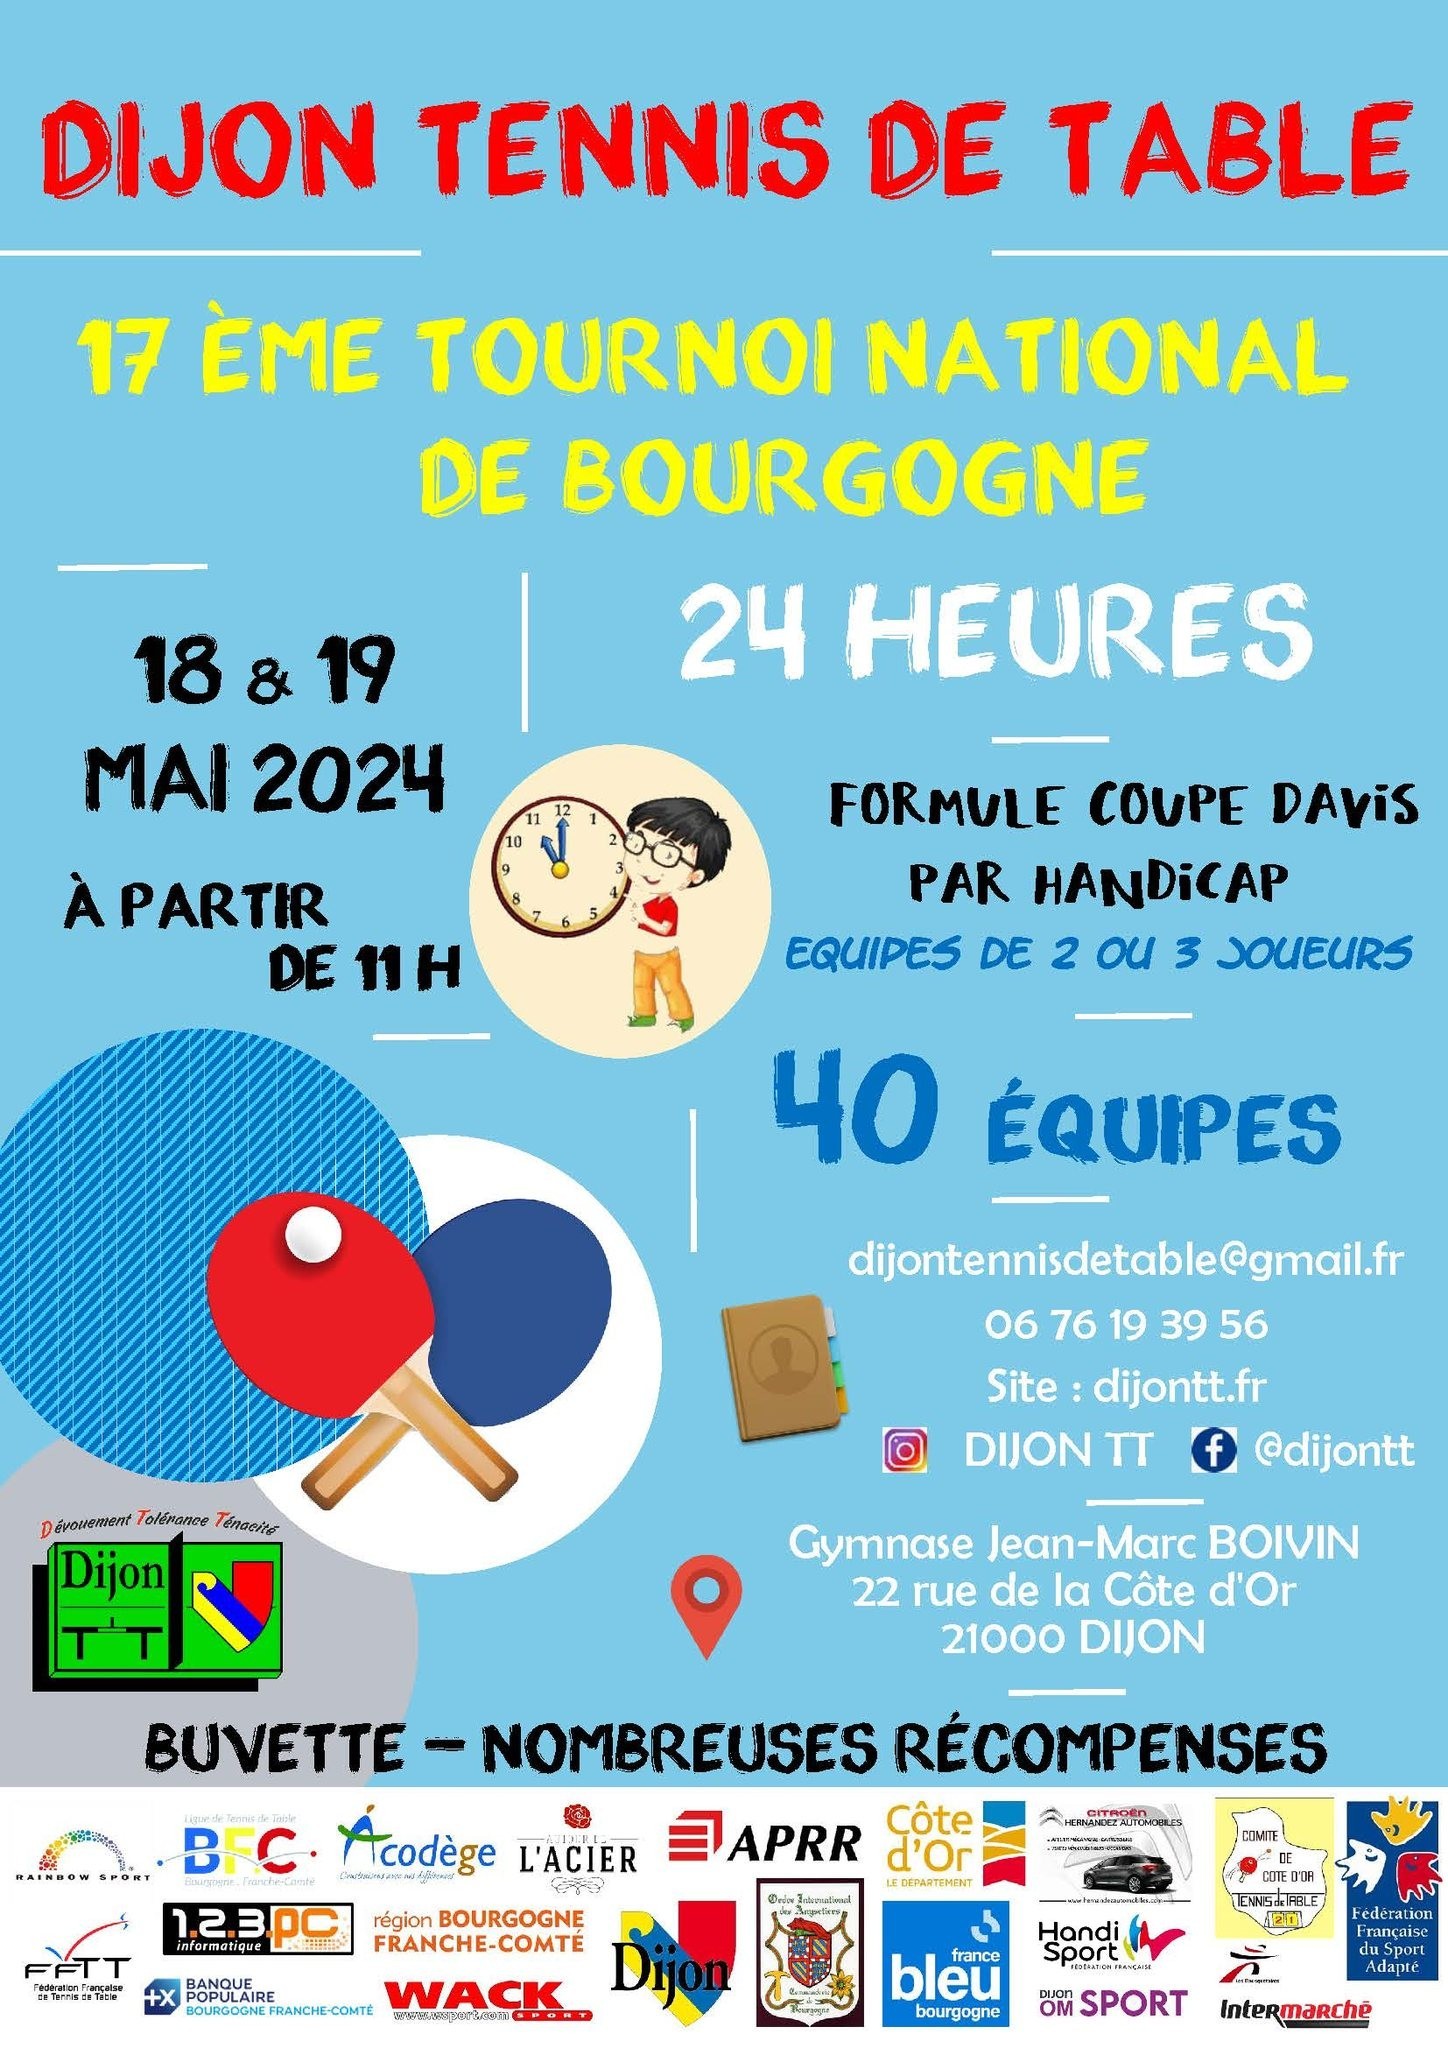 17 ème tournoi national de Bourgogne des 24 heures